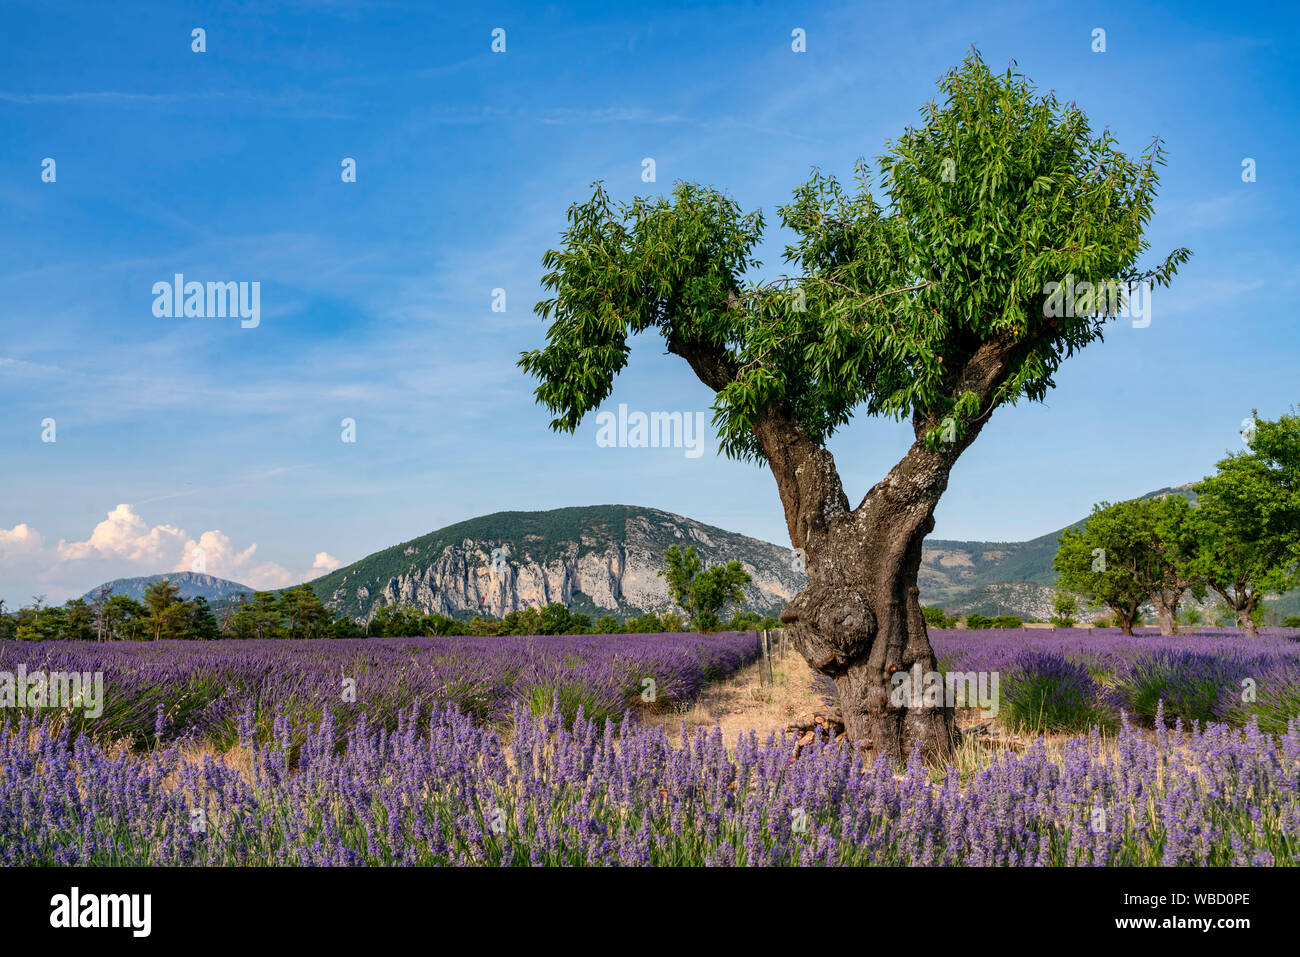 Lavender field with tree, Lavandula angustifolia, Plateau de Valensole, France, Provence-Alpes-Cote d'Azur, France Stock Photo